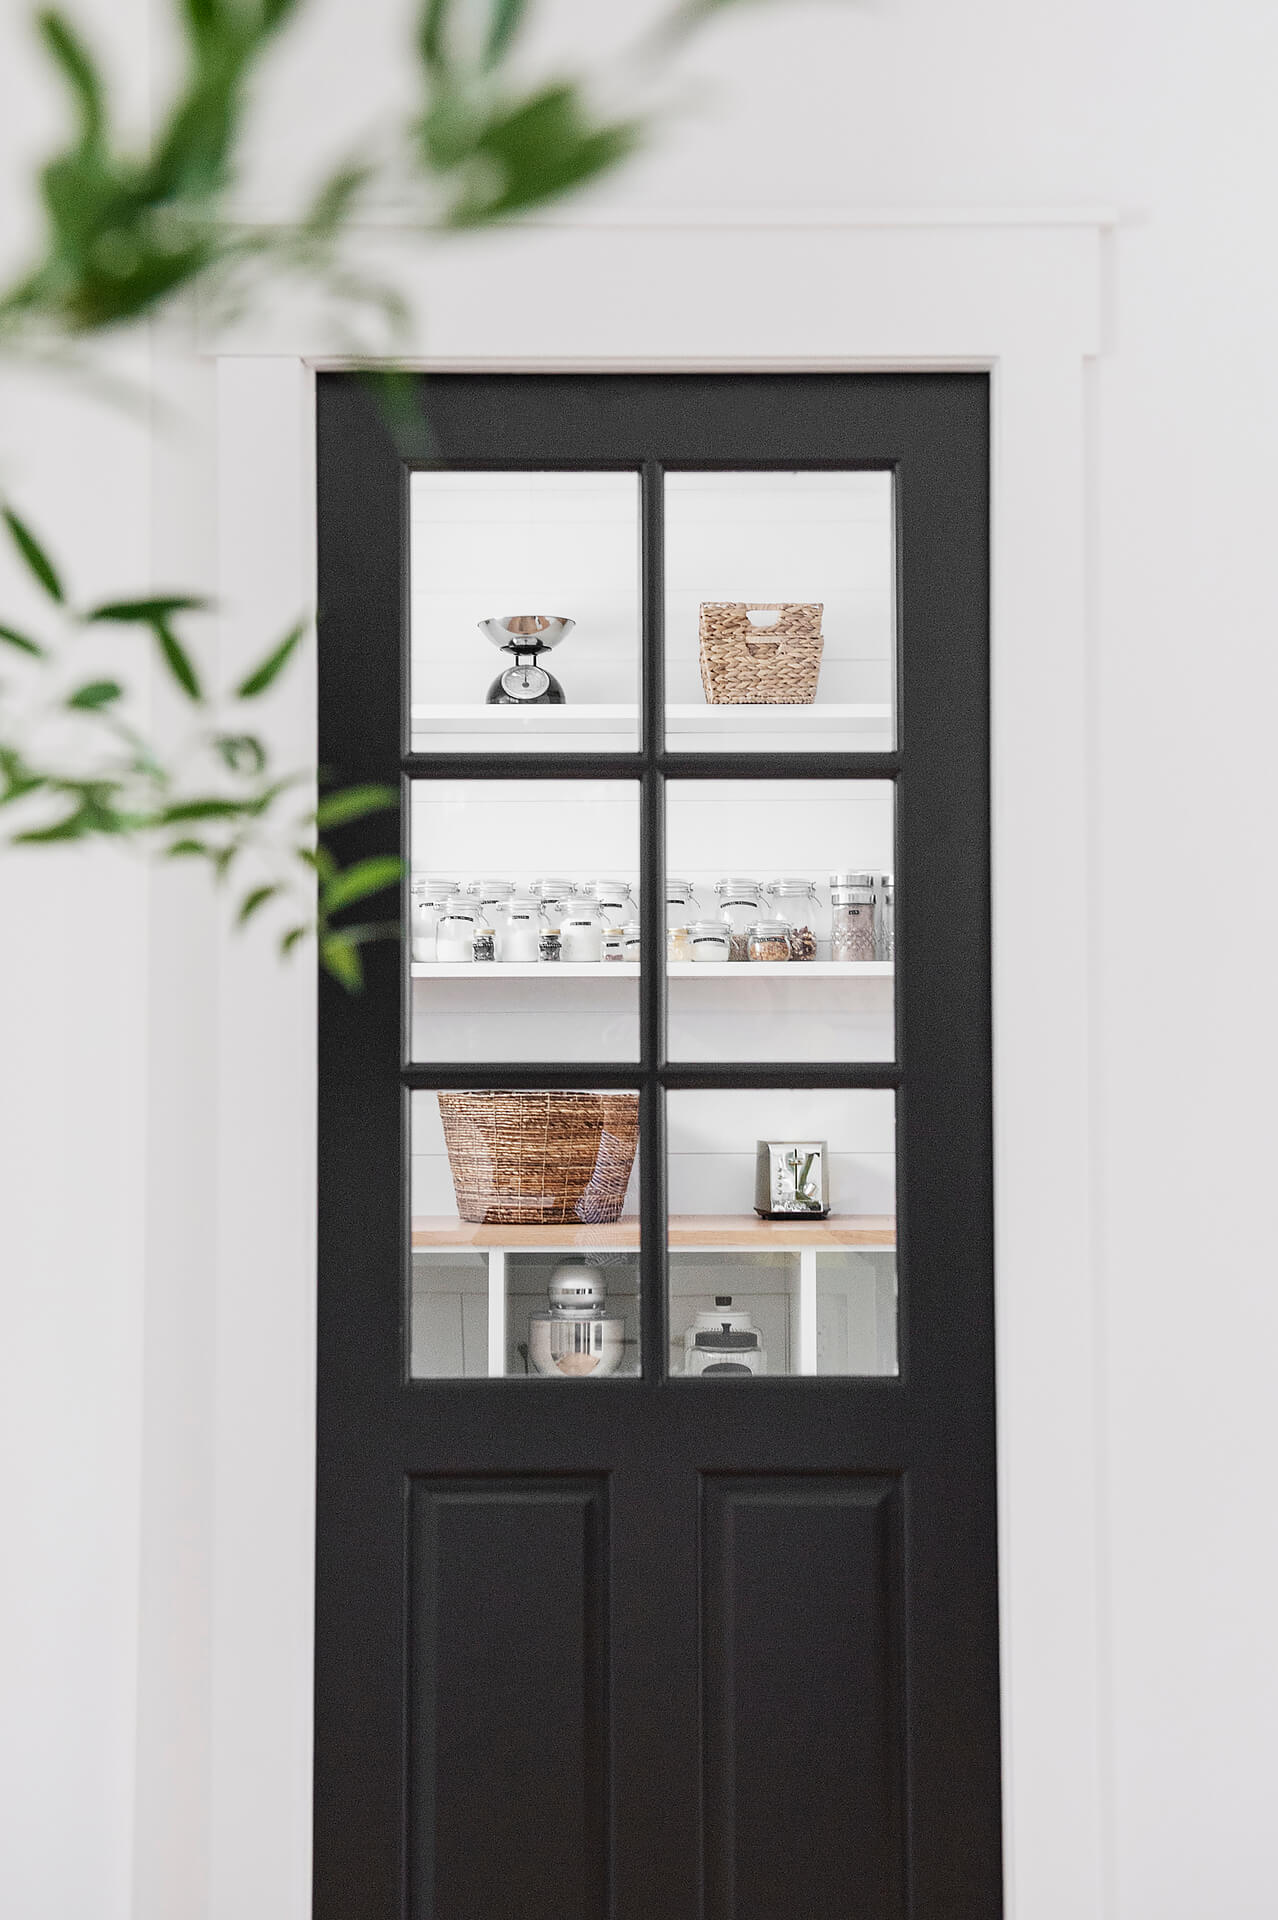 AKB Design cuisine blanche armoire noire poignee laiton comptoir quartz garde manger 19